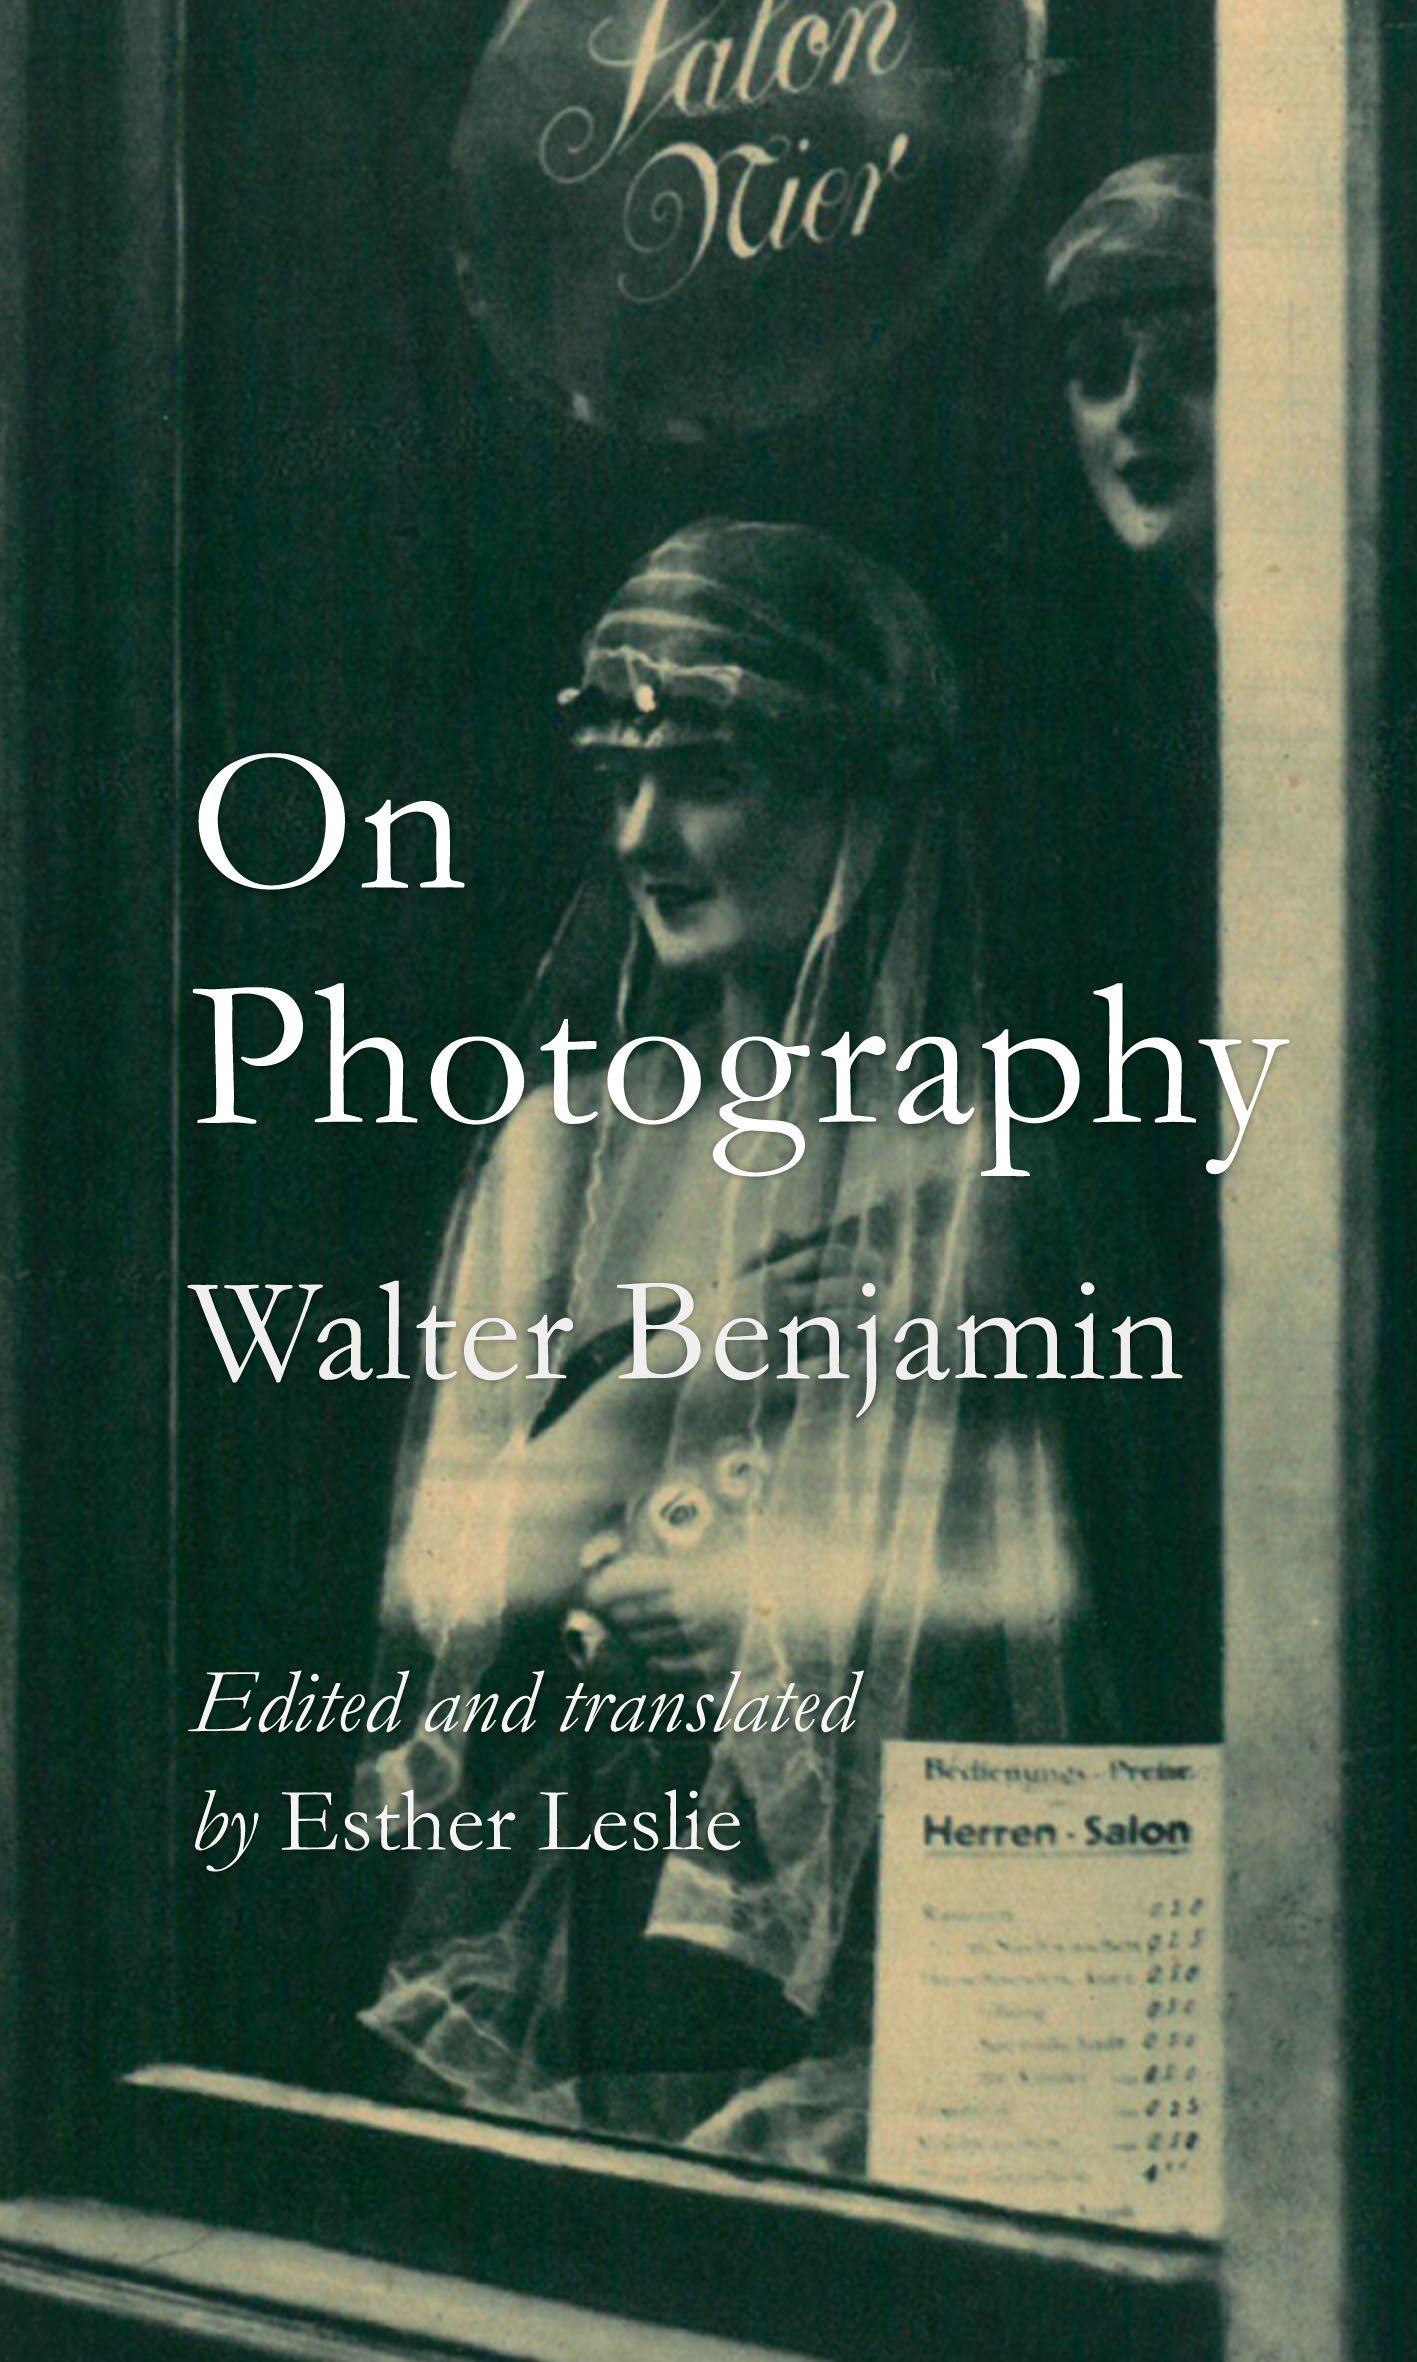 Benjamin short history of photography pdf download